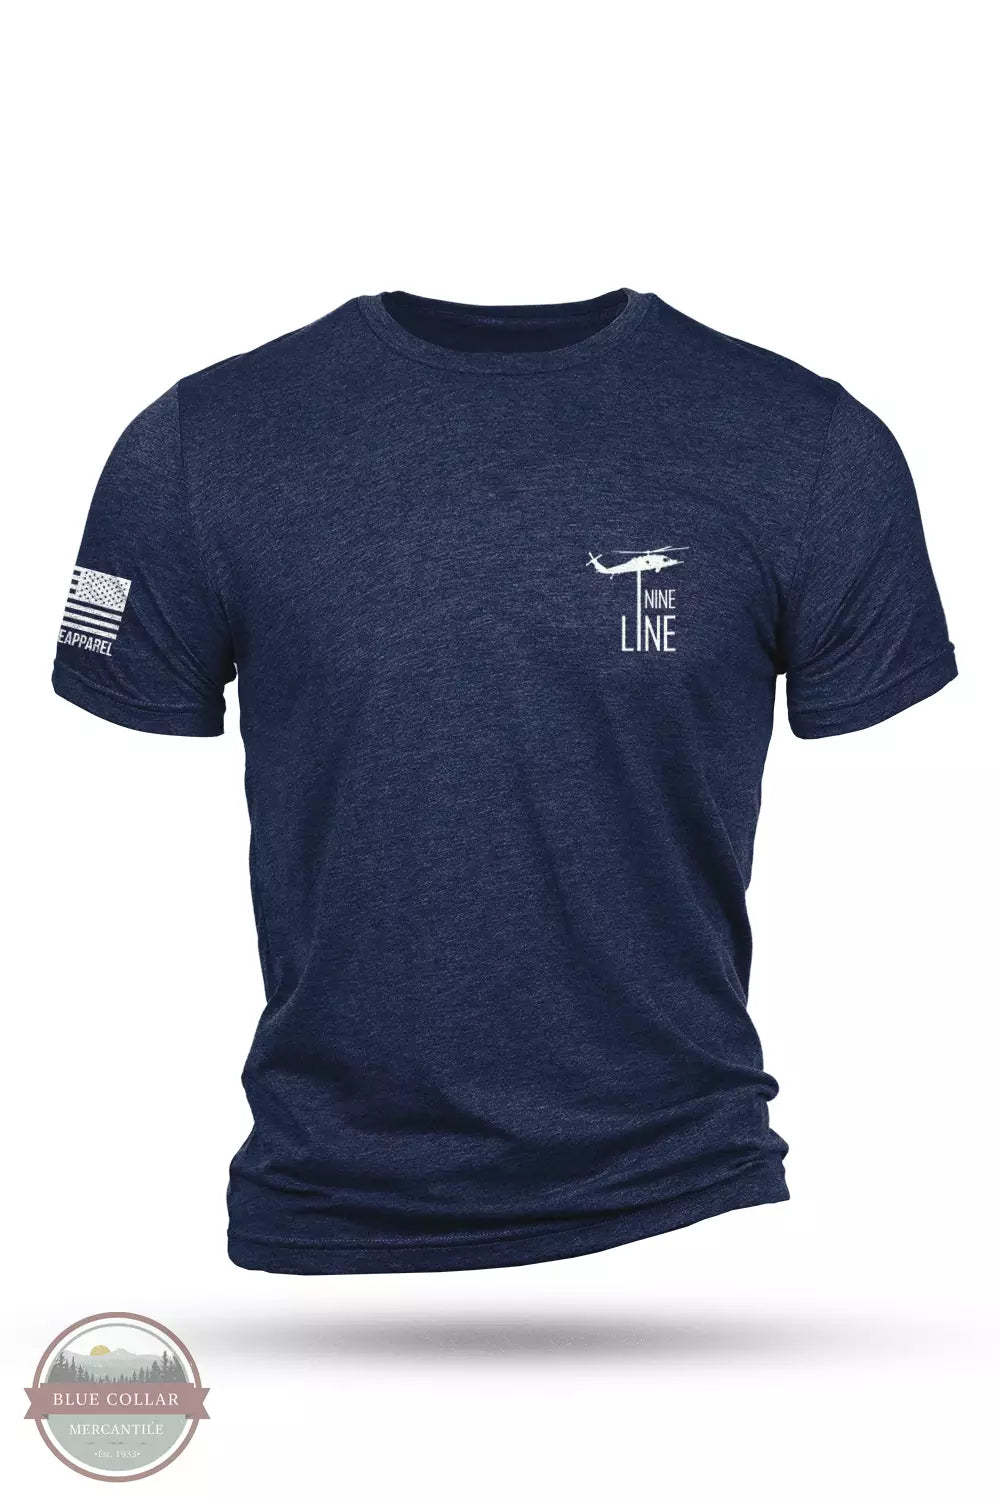 Nine Line REREAD-TSTRI-NAVY Reread Not Rewritten Tri-Blend Short Sleeve T-Shirt in Navy Front View